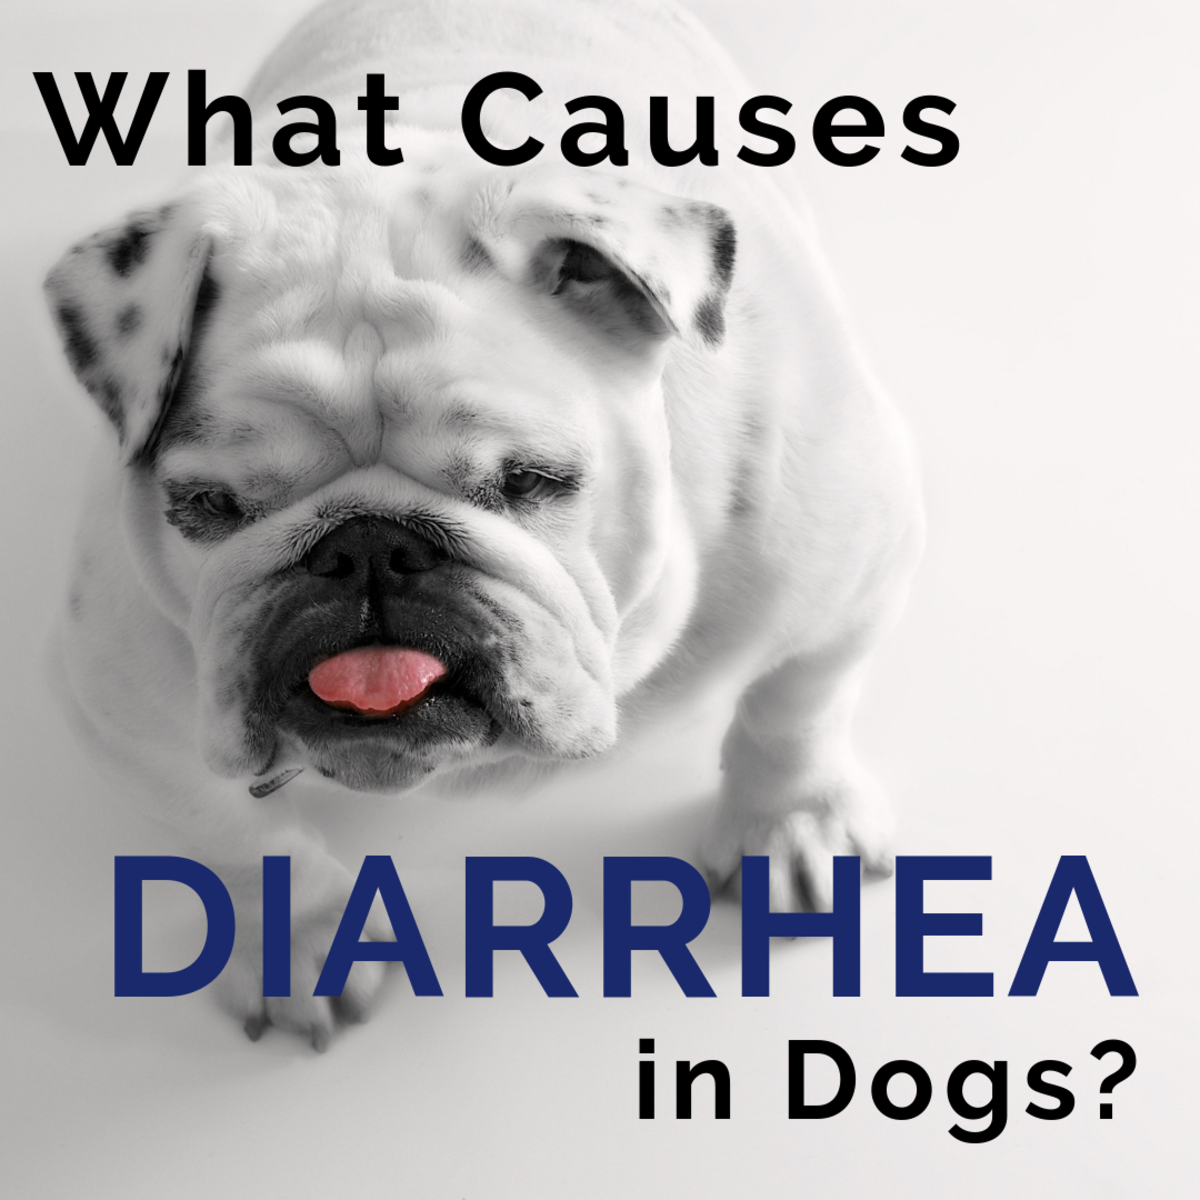 Dog Diarrhea: Causes and Treatment